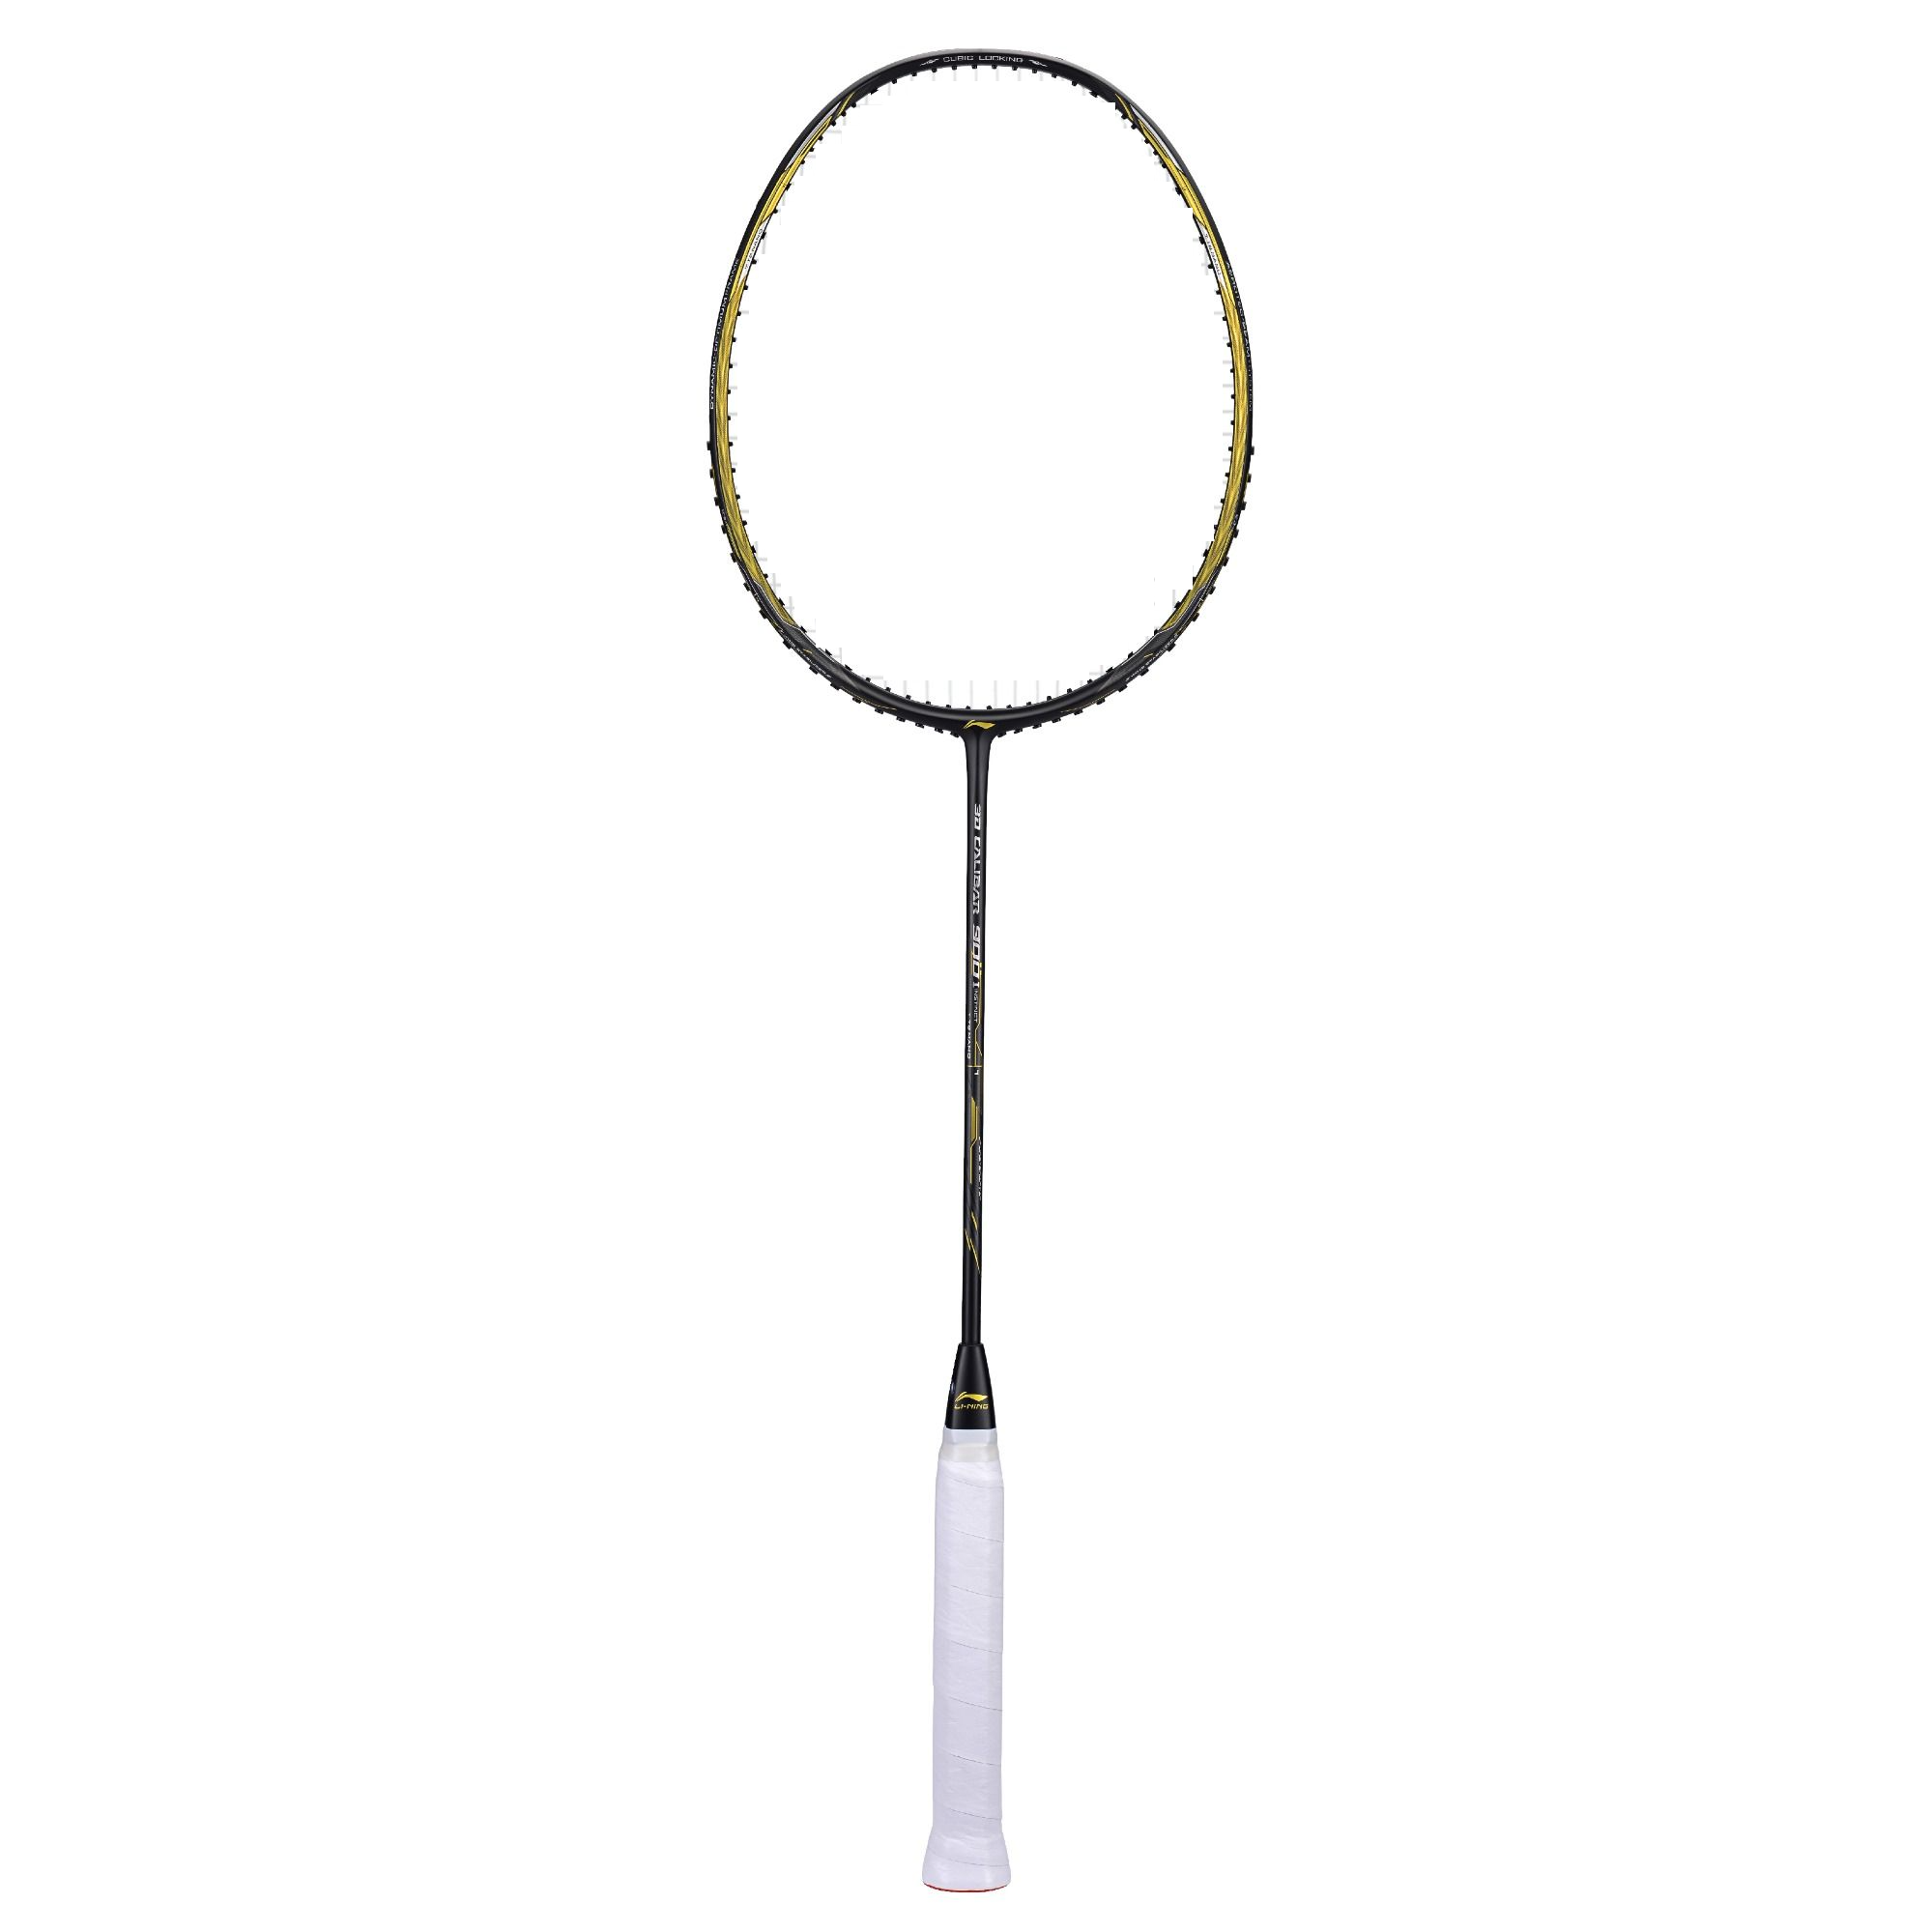 Li-Ning 3D CALIBAR 900 INSTINCT (900I) Badminton Racquet